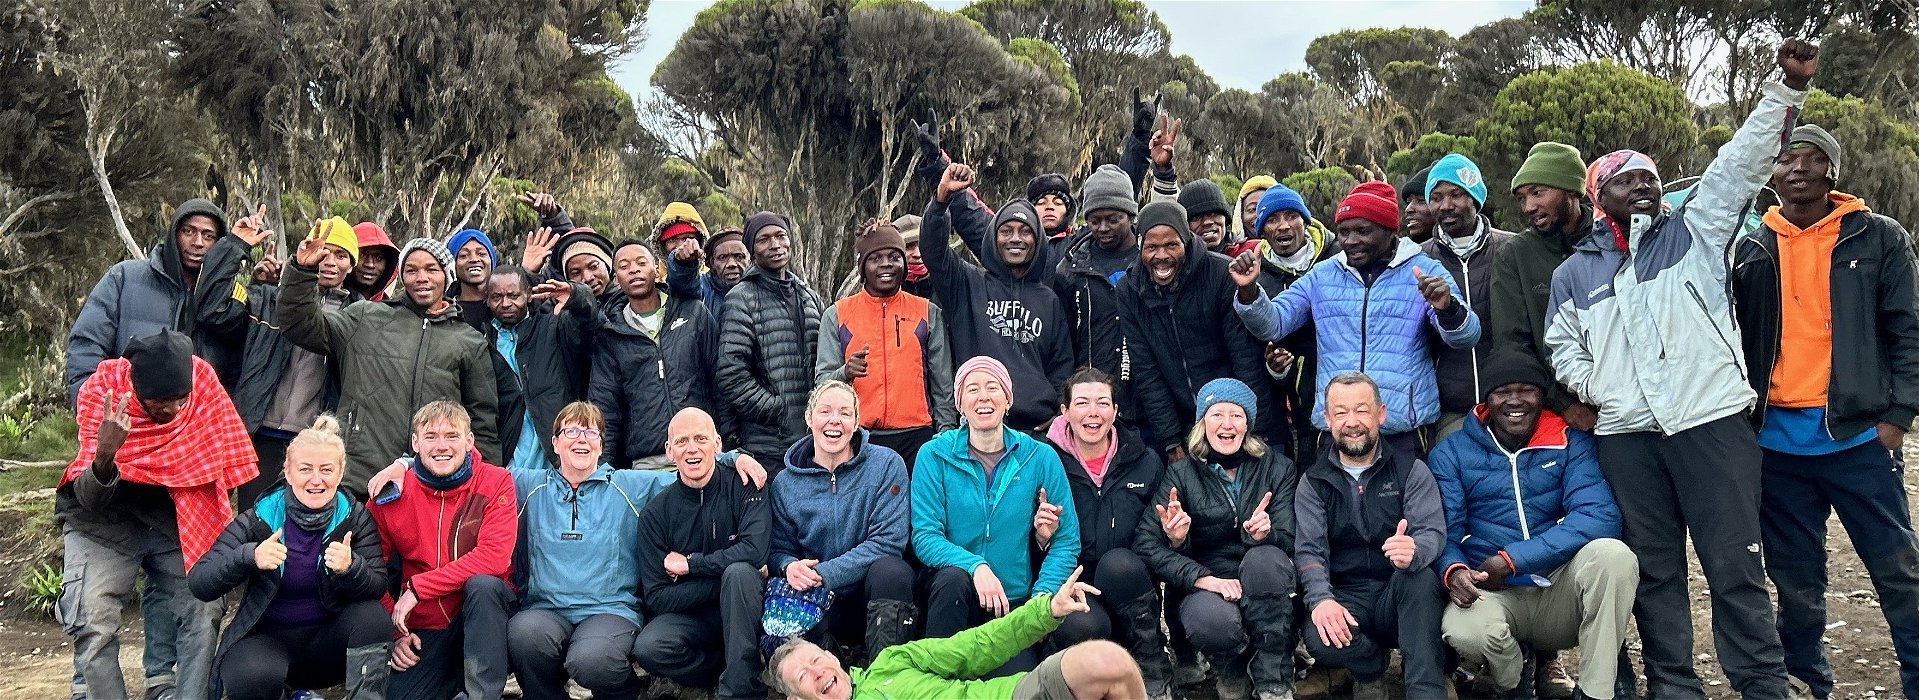 5 Stars for Kilimanjaro ~ Adventure of a Lifetime!